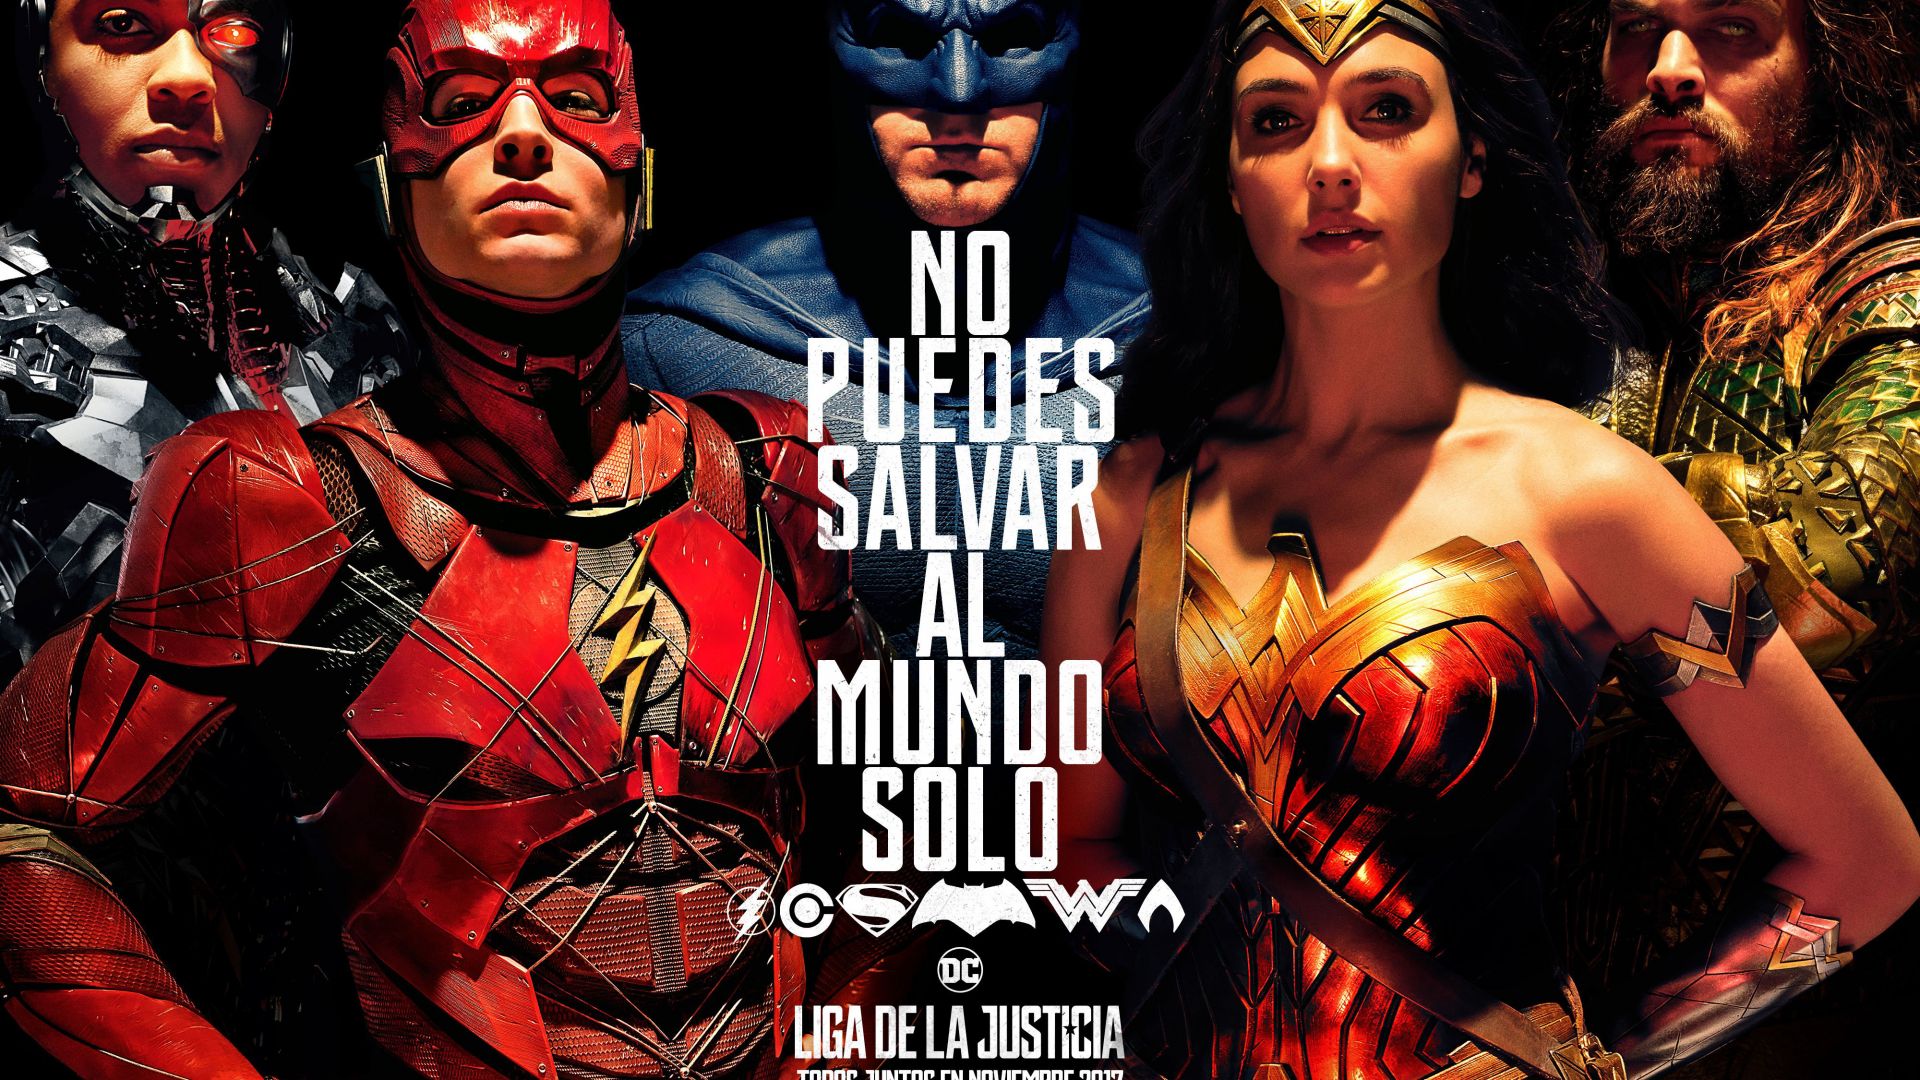 Лига справедливости, Justice League, Wonder Woman, Batman, The Flash, 4k (horizontal)